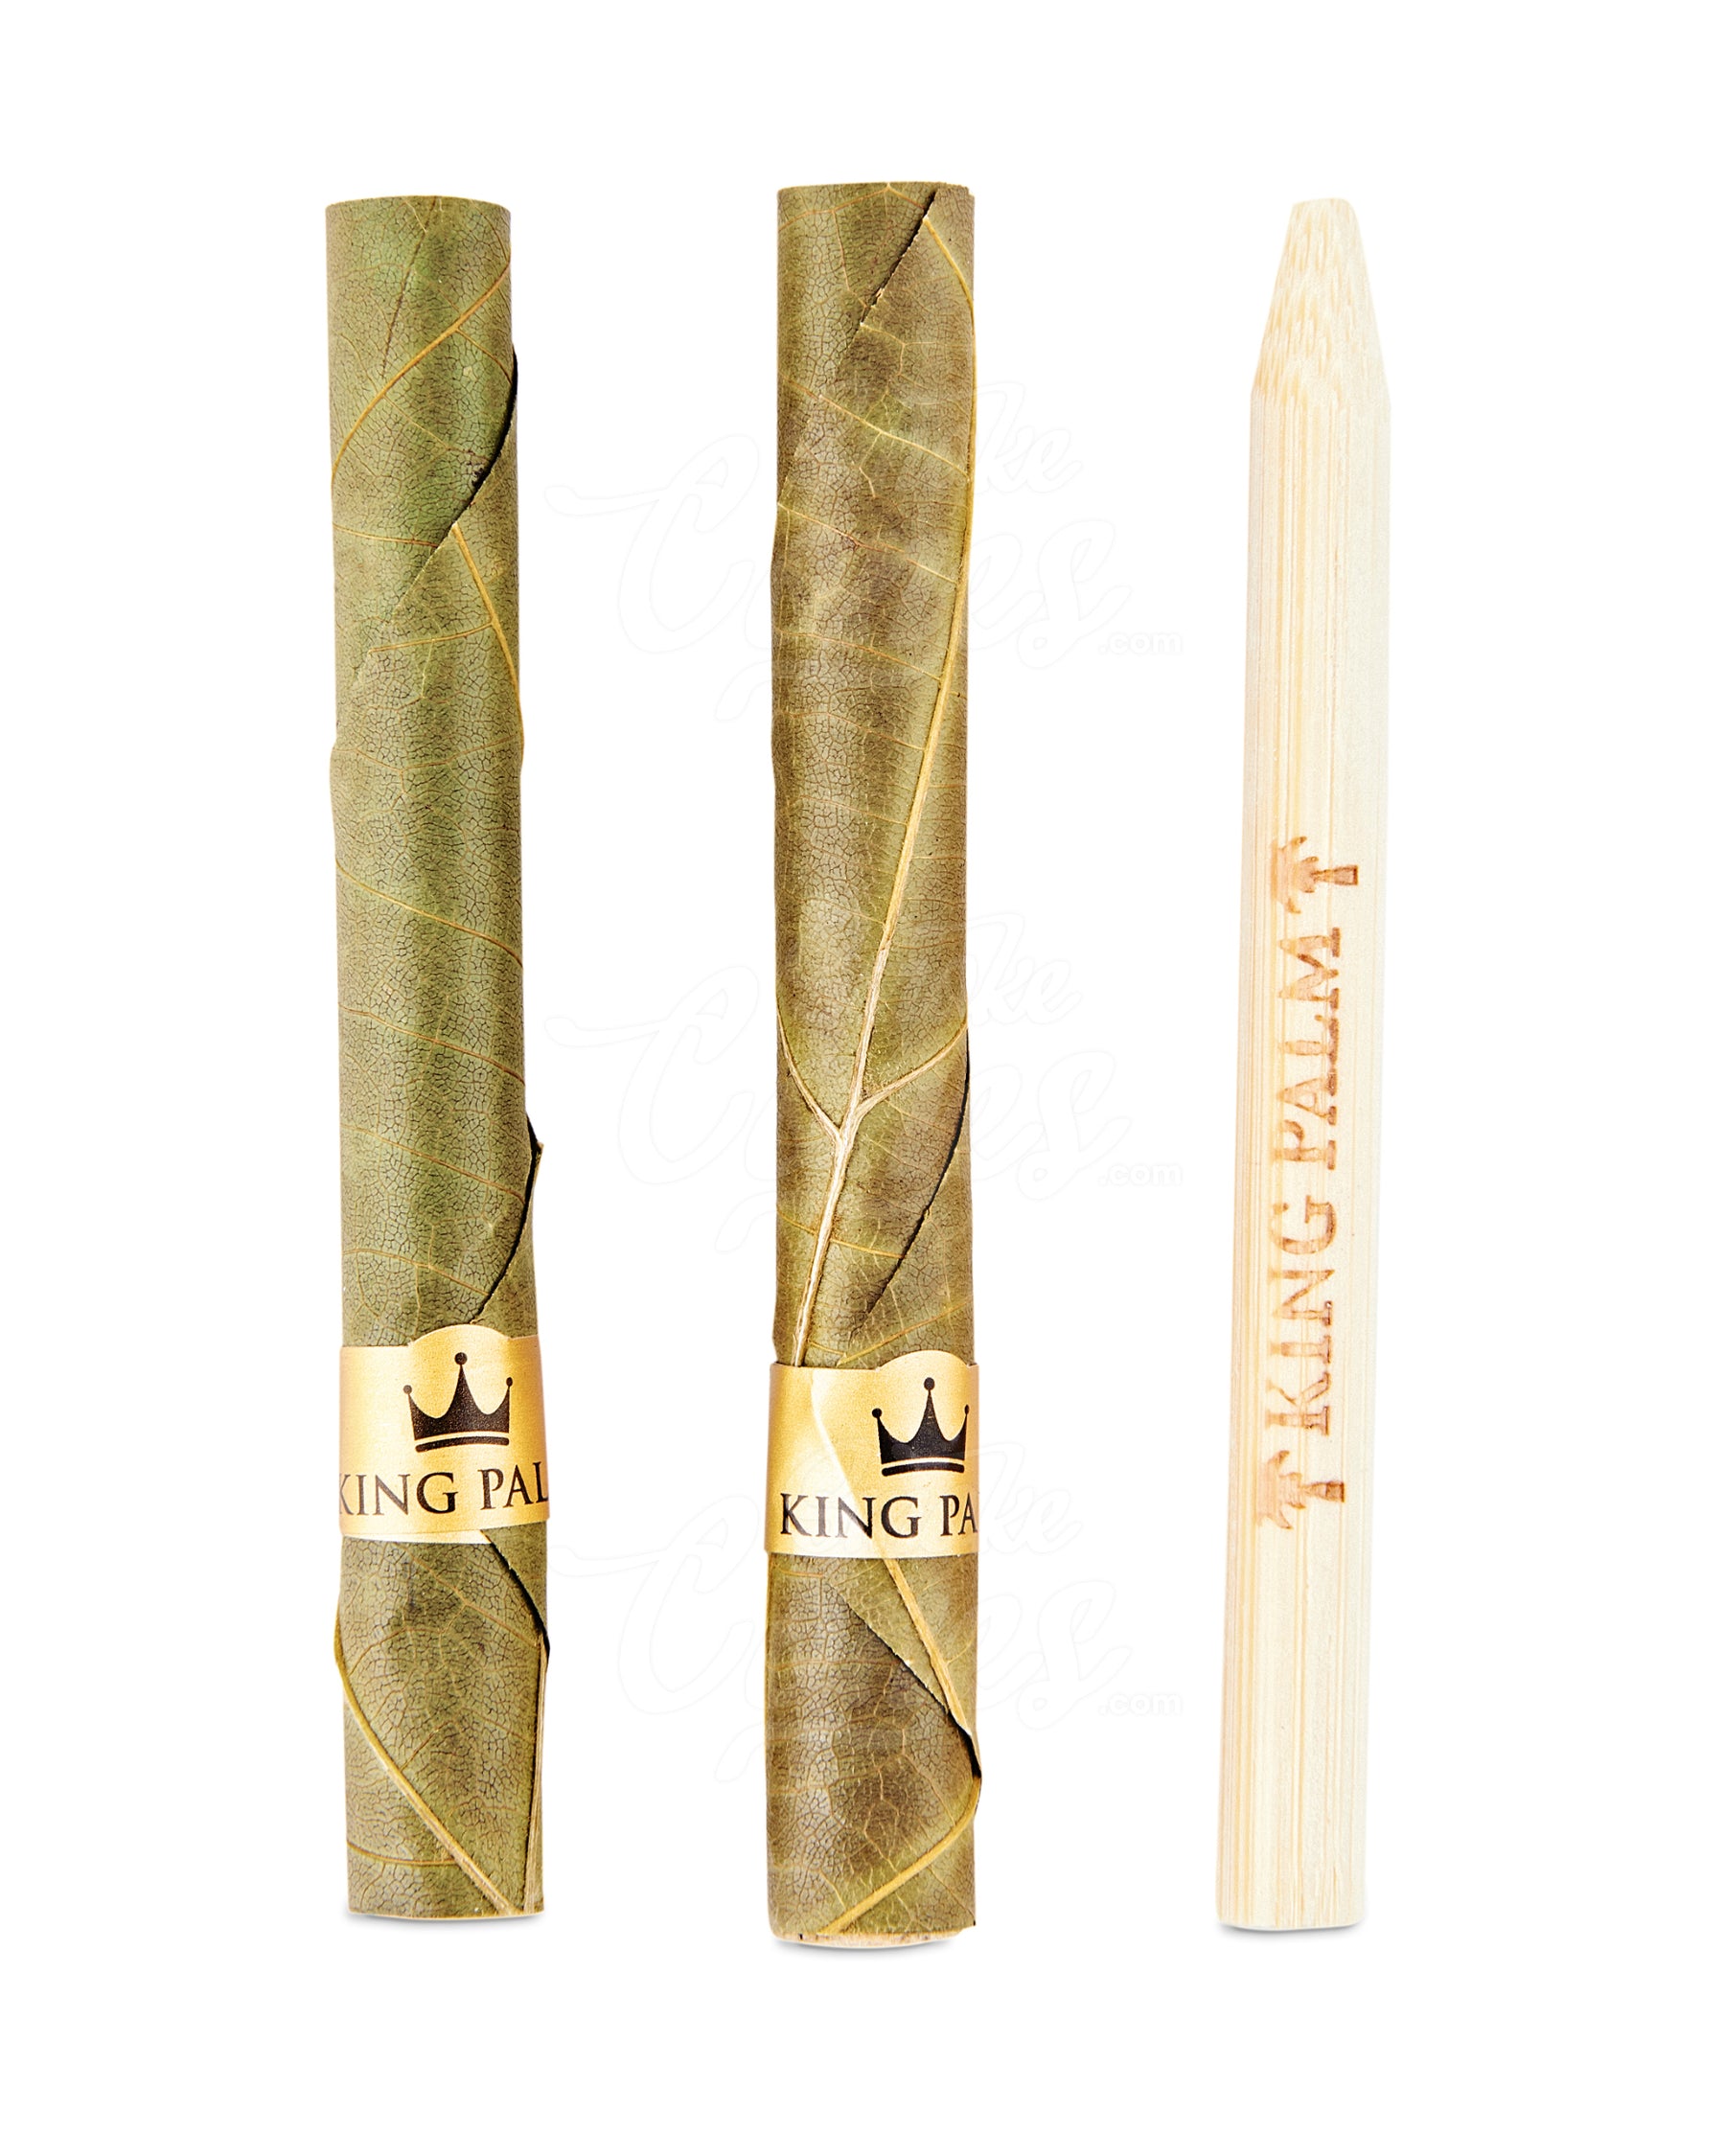 King Palm Mango OG Natural Mini Leaf Blunt Wraps 20/Box - 5